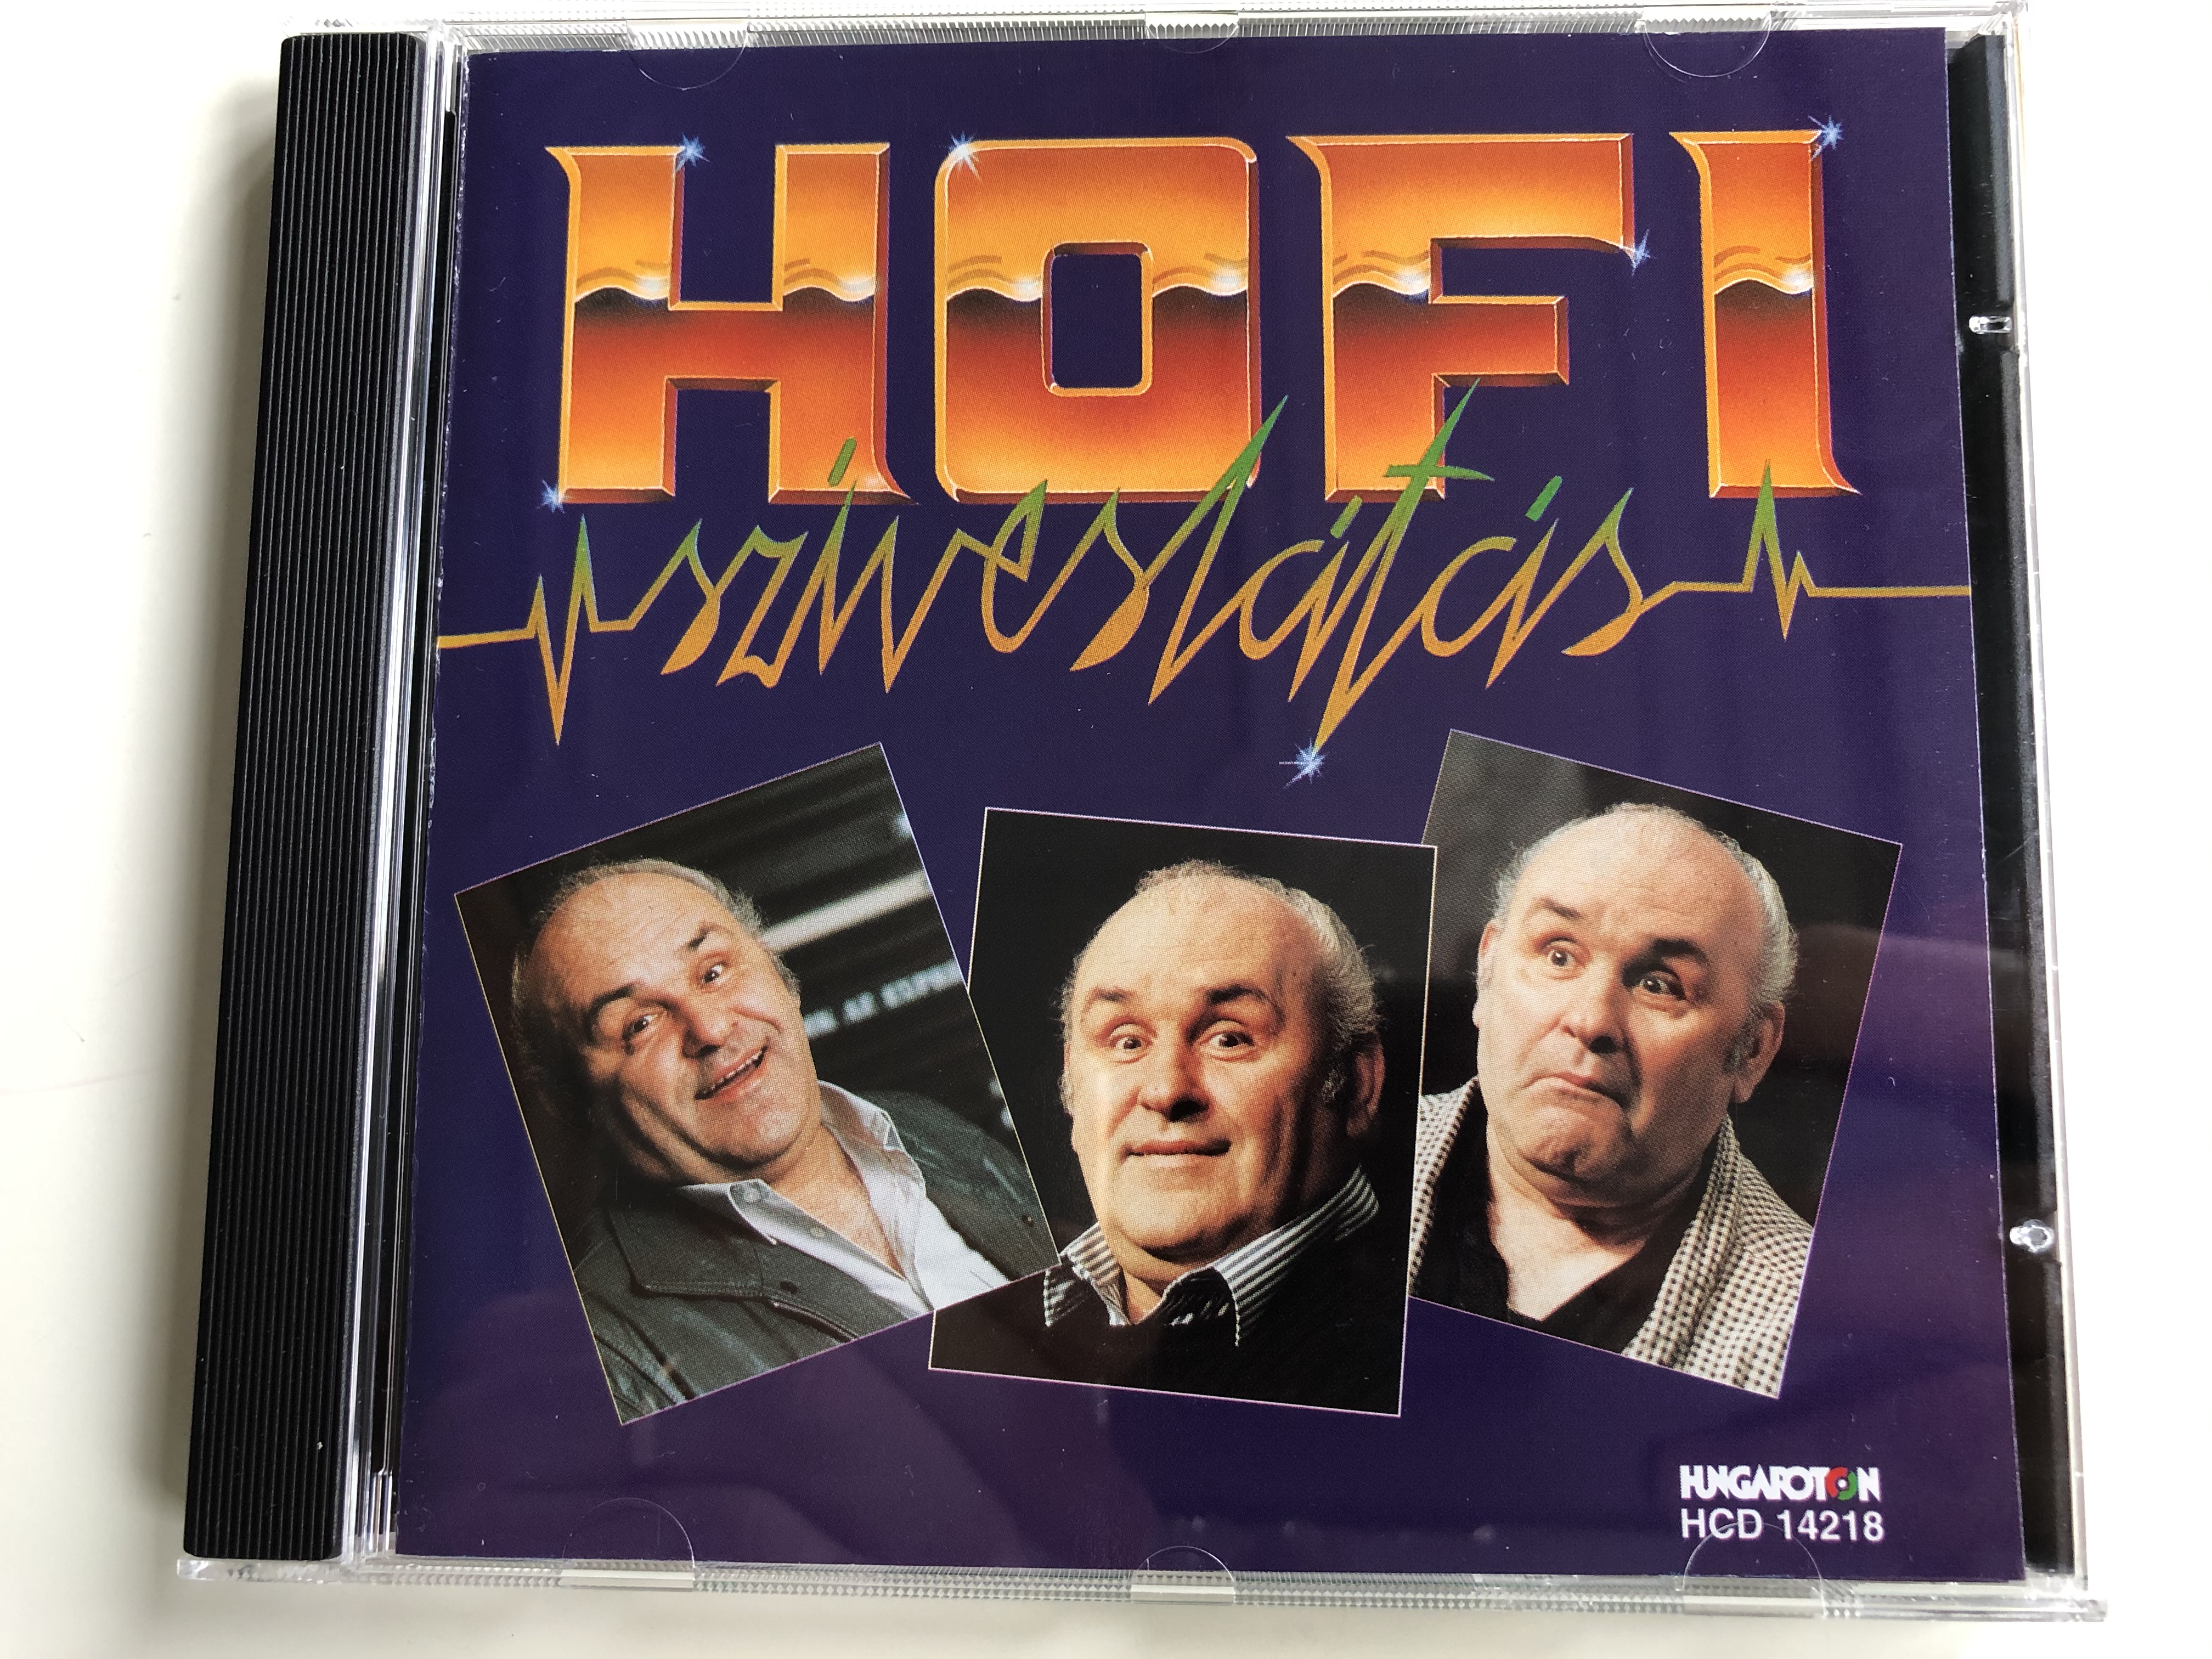 hofi-sz-vesl-t-s-hungaroton-audio-cd-2003-hcd-14218-1-.jpg